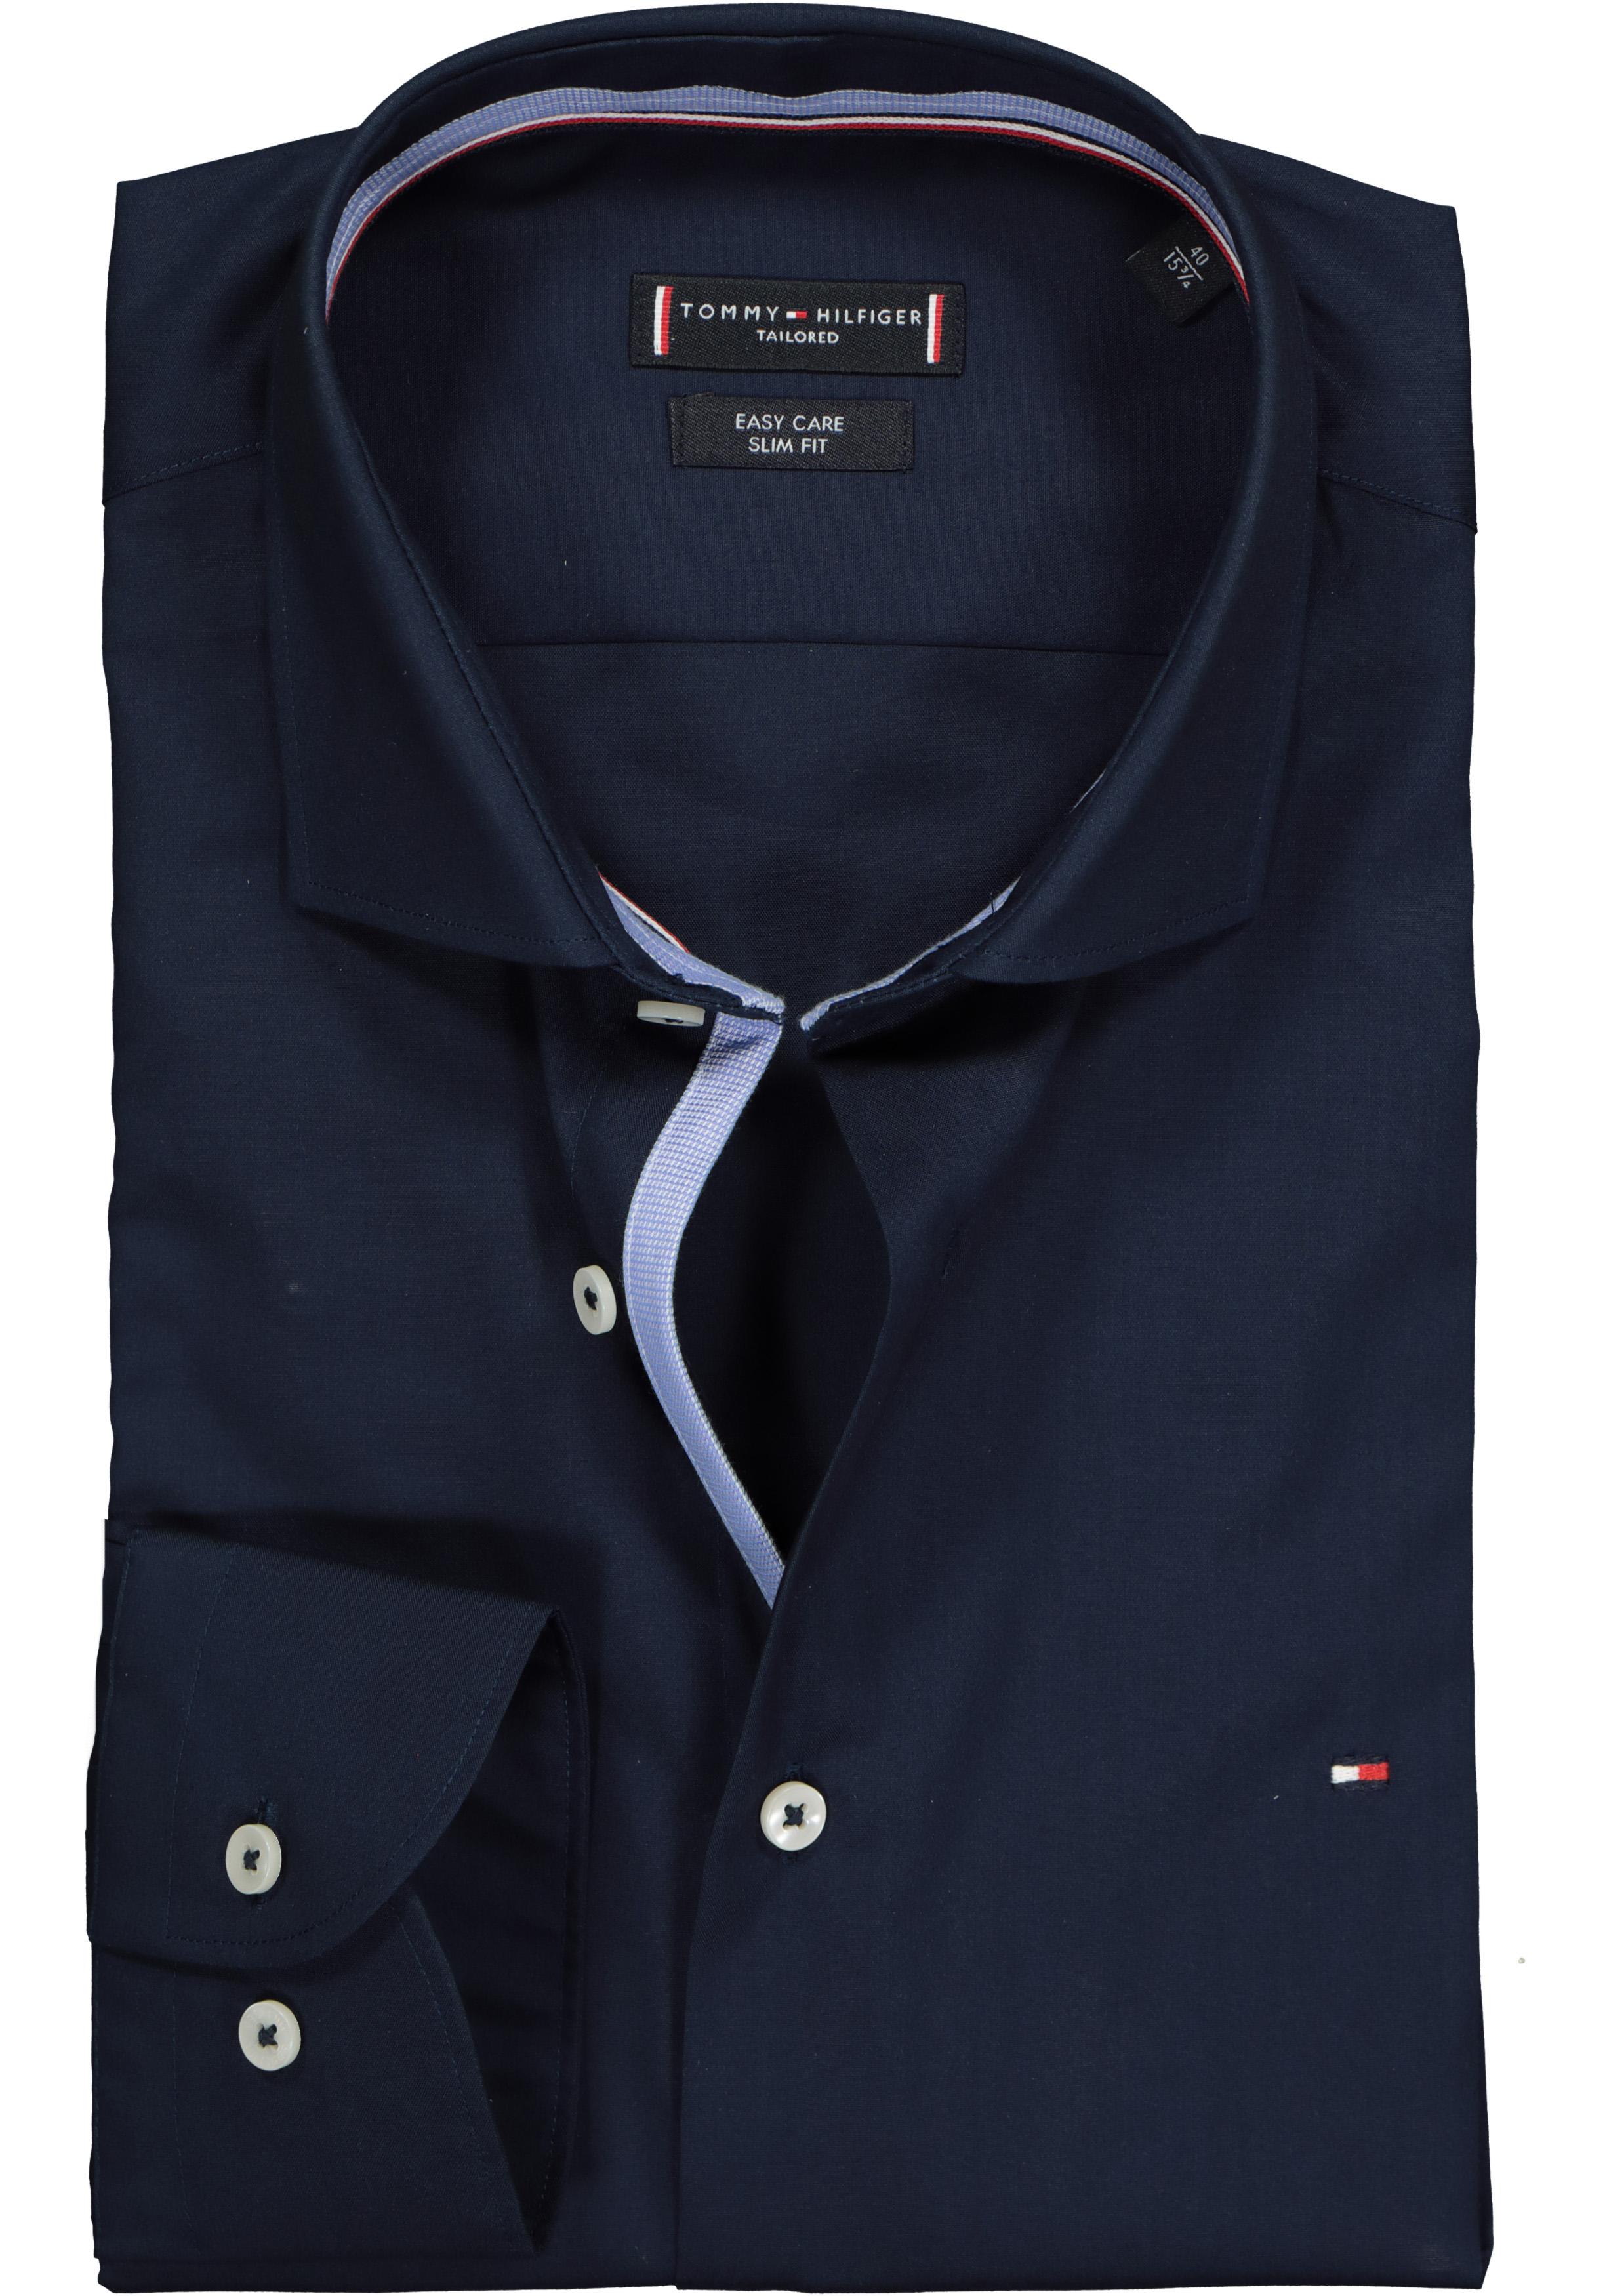 Alternatief regisseur Extra Tommy Hilfiger Classic slim fit overhemd, donkerblauw (contrast) - Zomer  SALE tot 50% korting